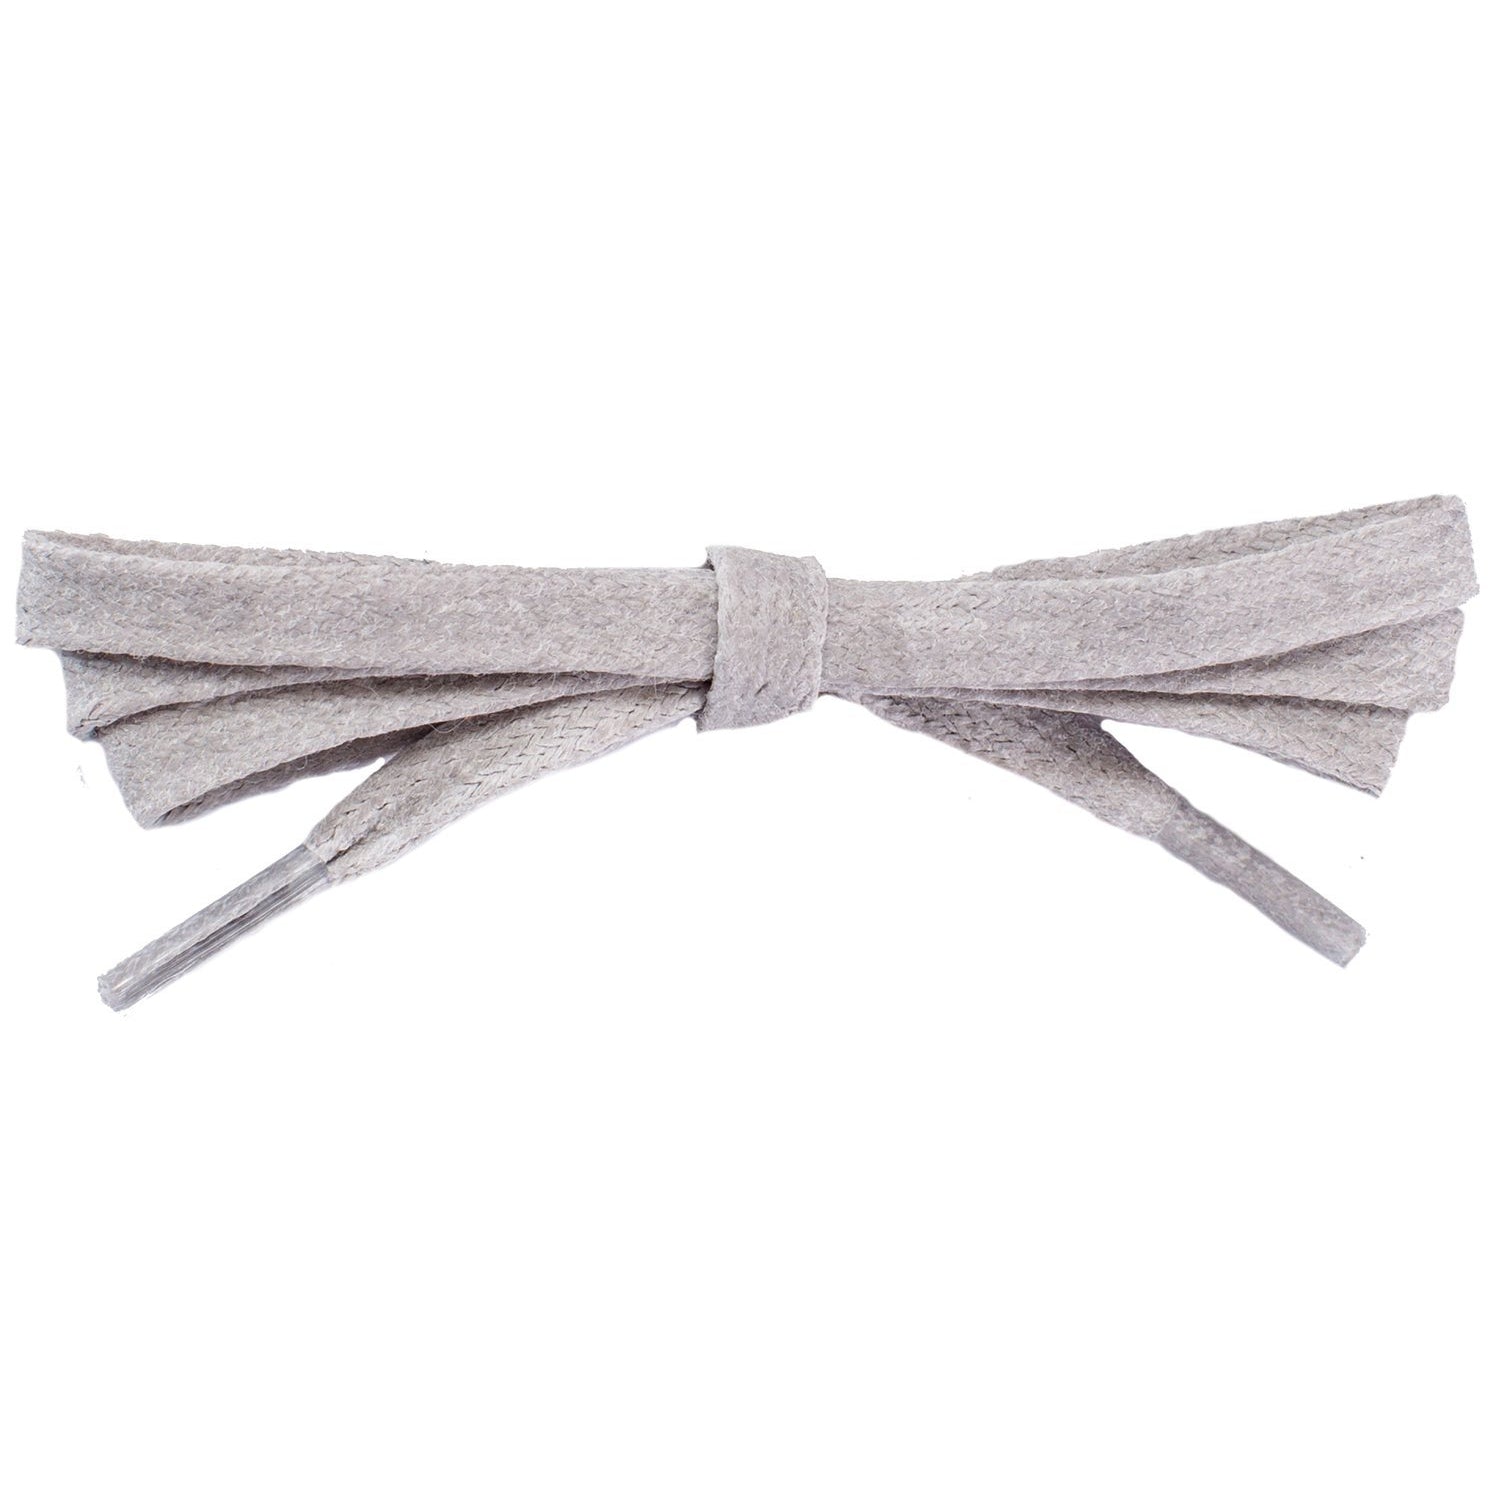 Wholesale Waxed Cotton Flat DRESS Laces 1/4'' - Light Gray (12 Pair Pack) Shoelaces